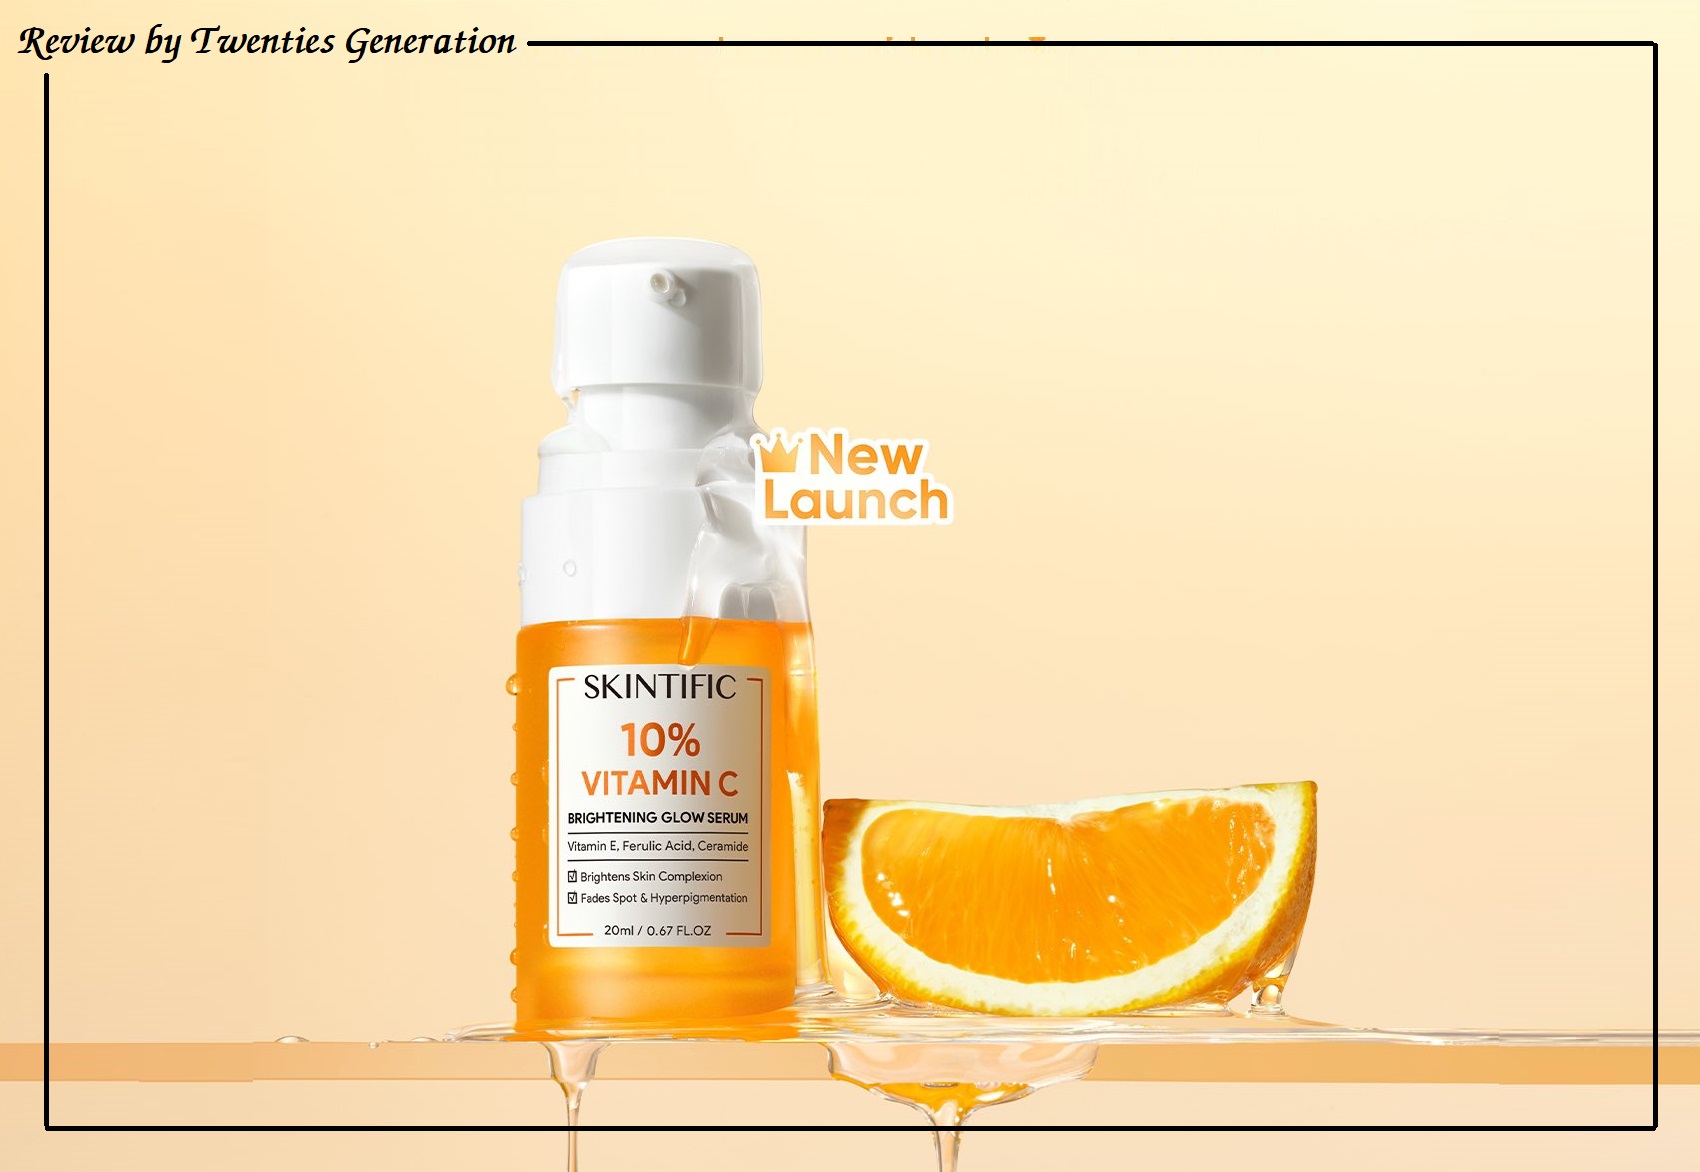 Skintific 10% Vitamin C Brightening Glow Serum Ingredients